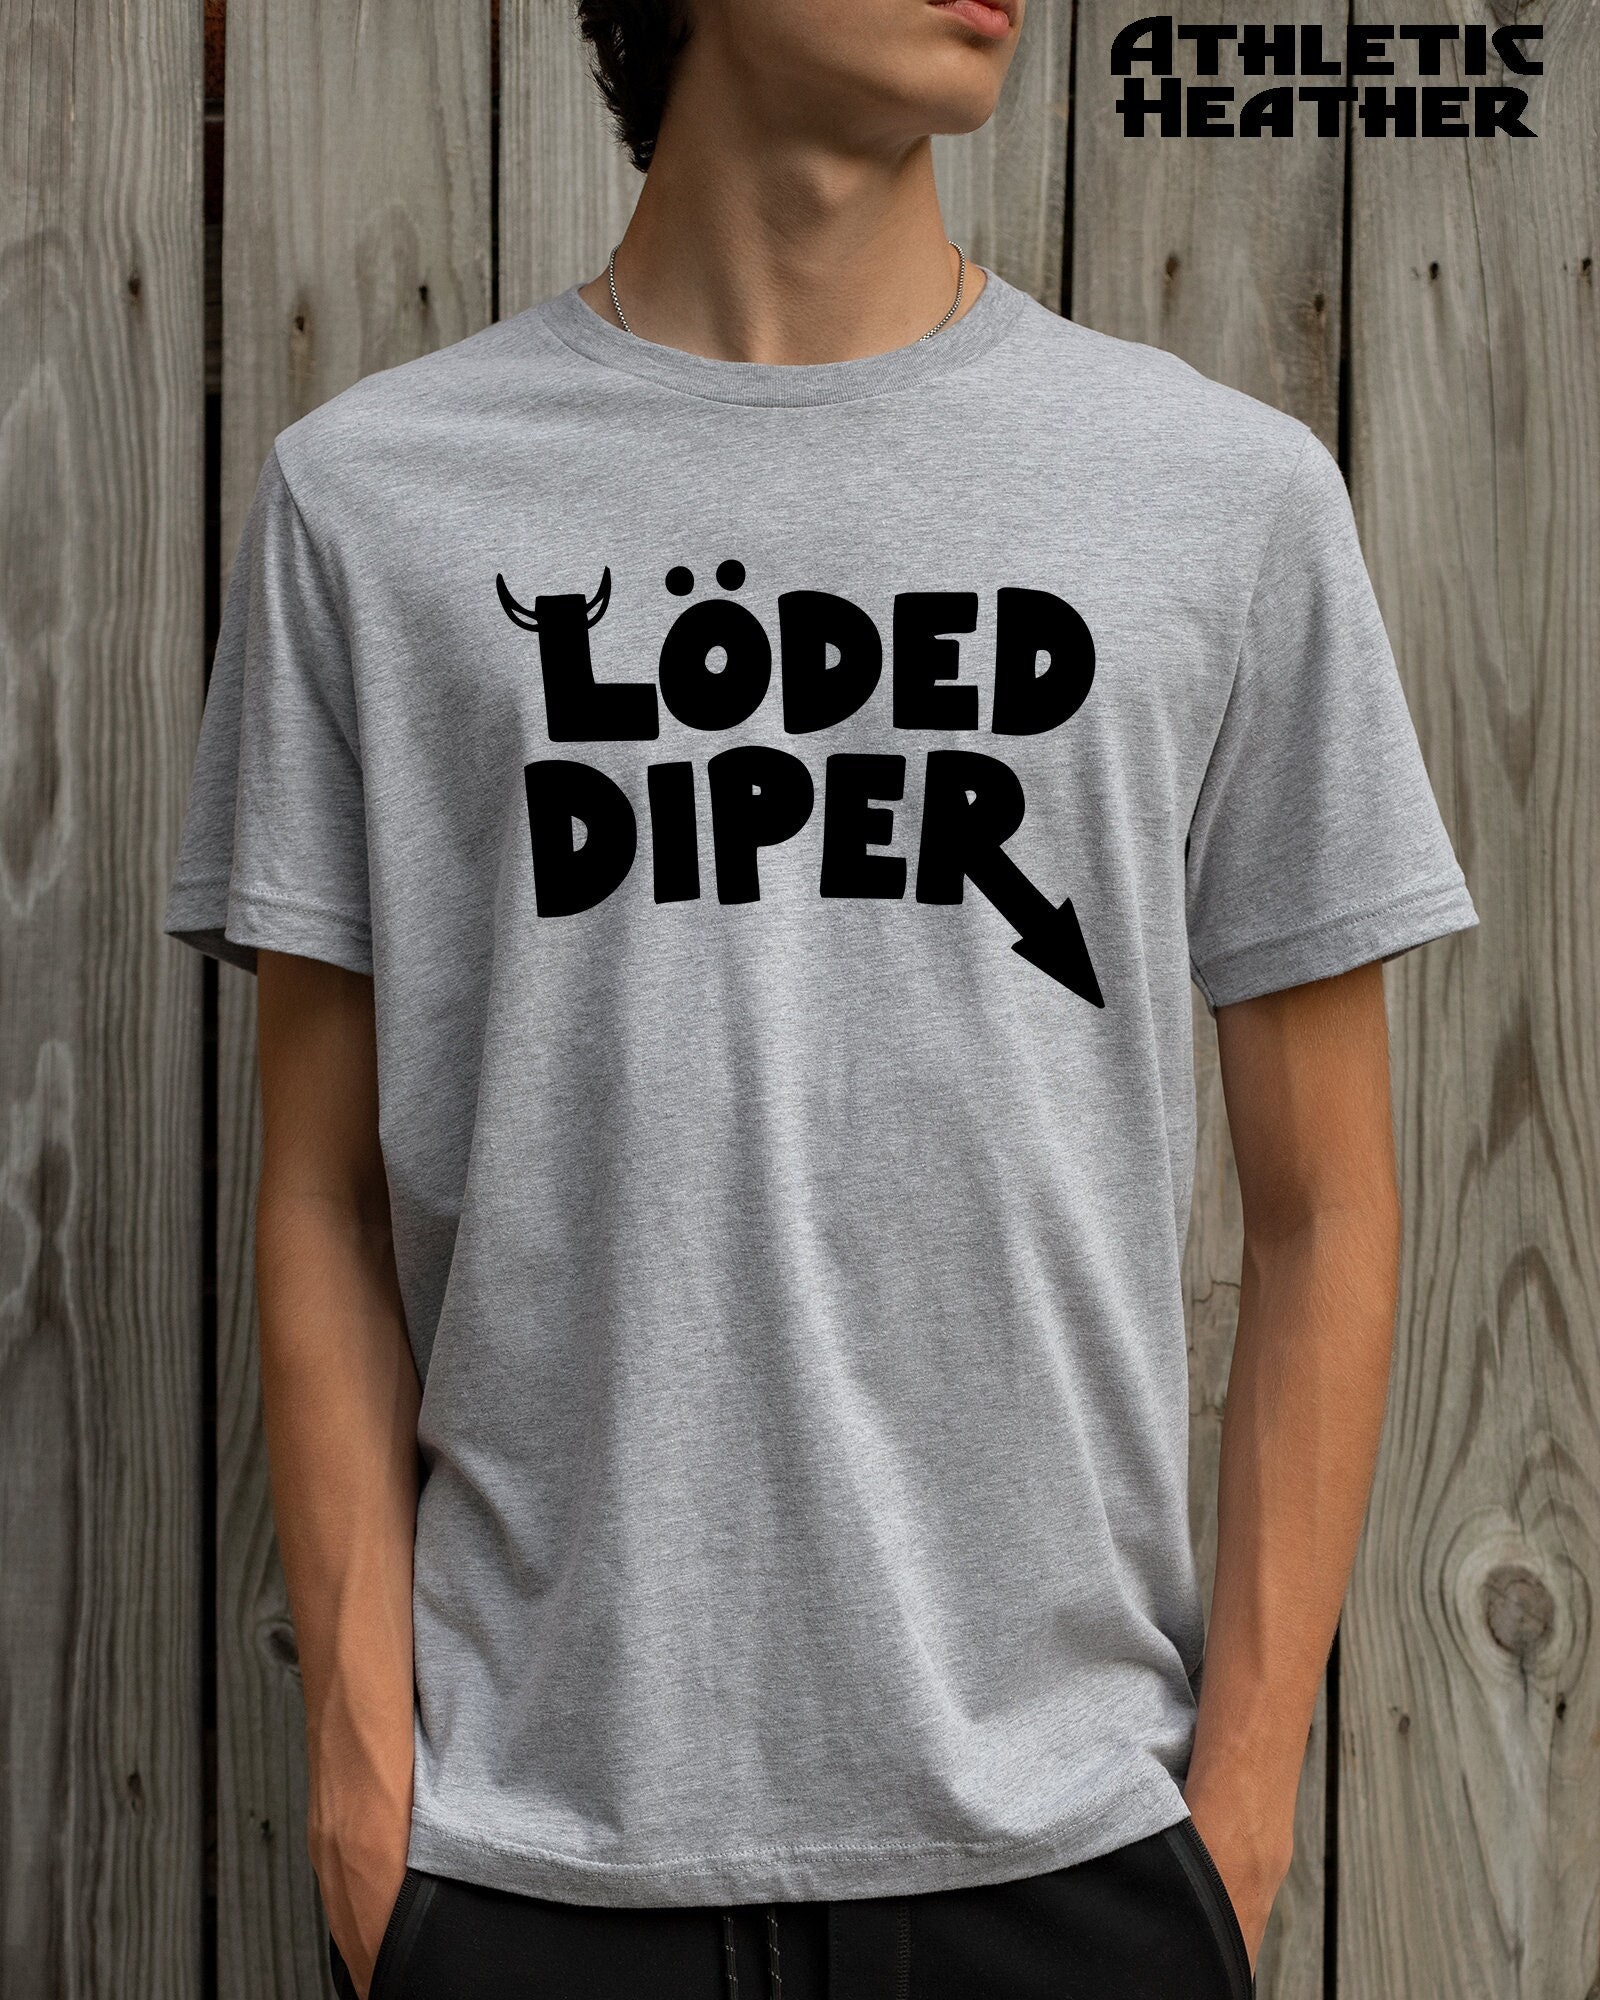 Loded Diper Shirt, Loded Diper Tshirt, Y2k Emo Tee Shirt